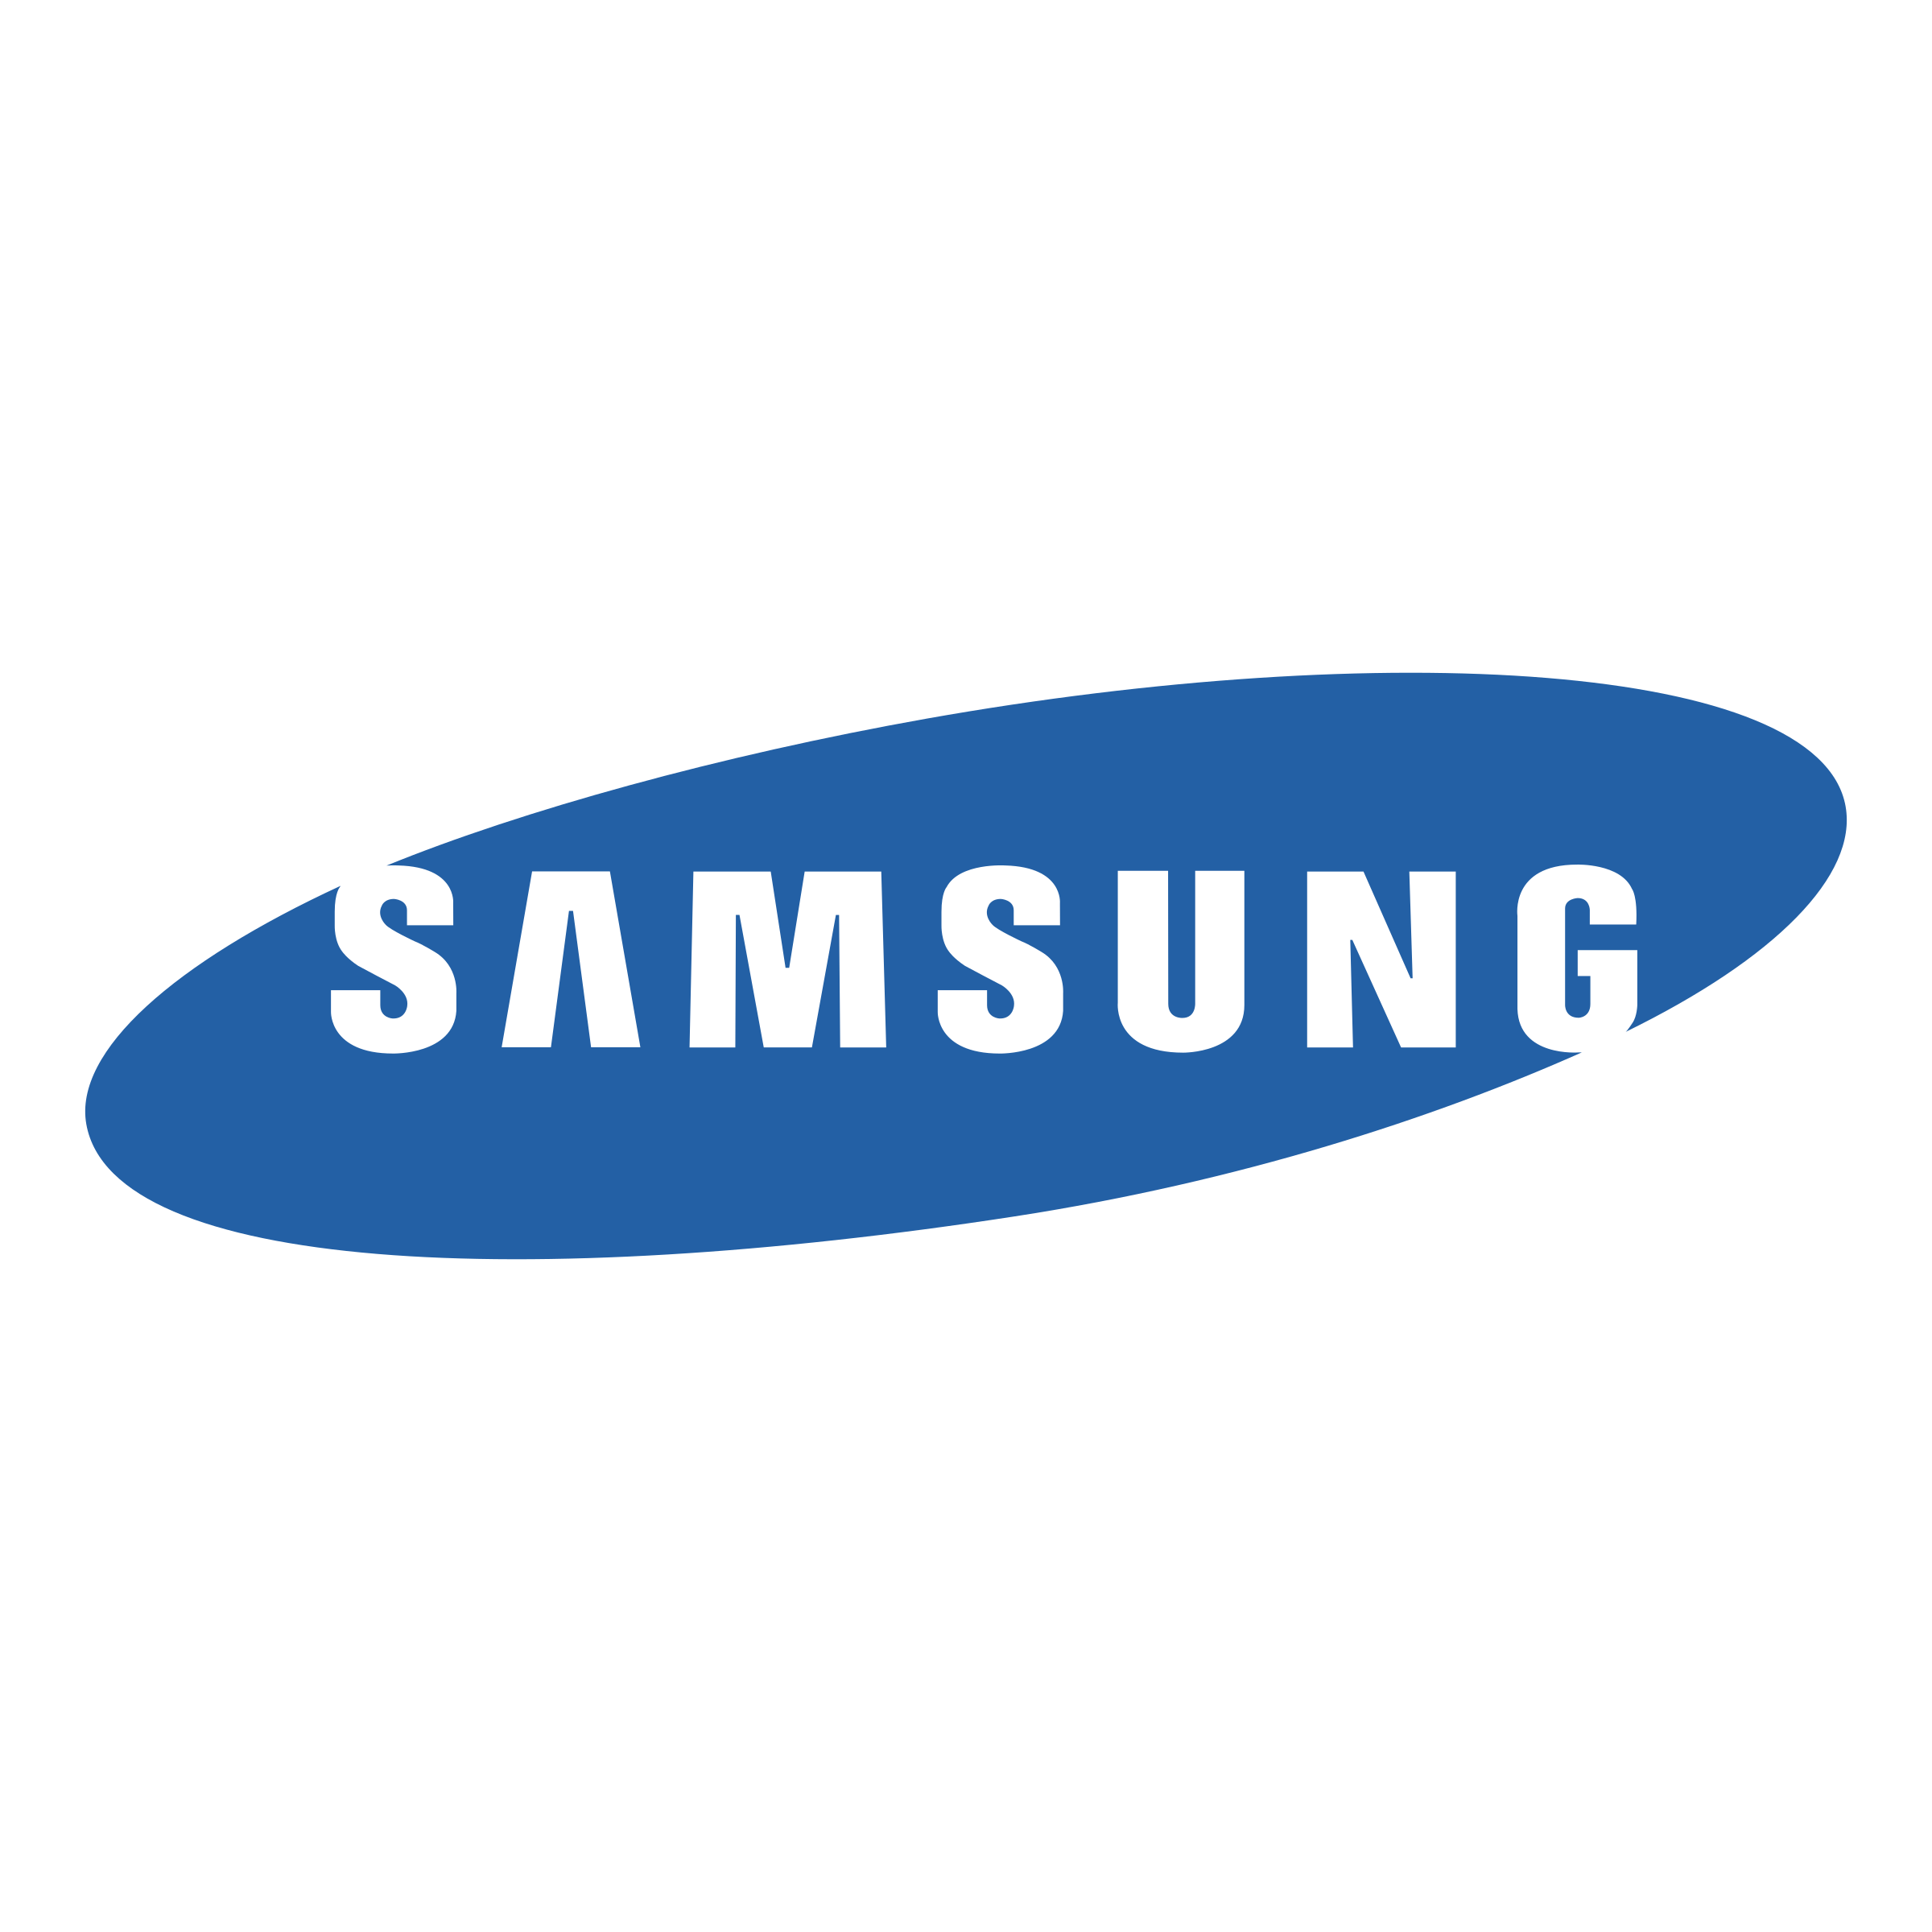 samsung-4-logo-png-transparent.png